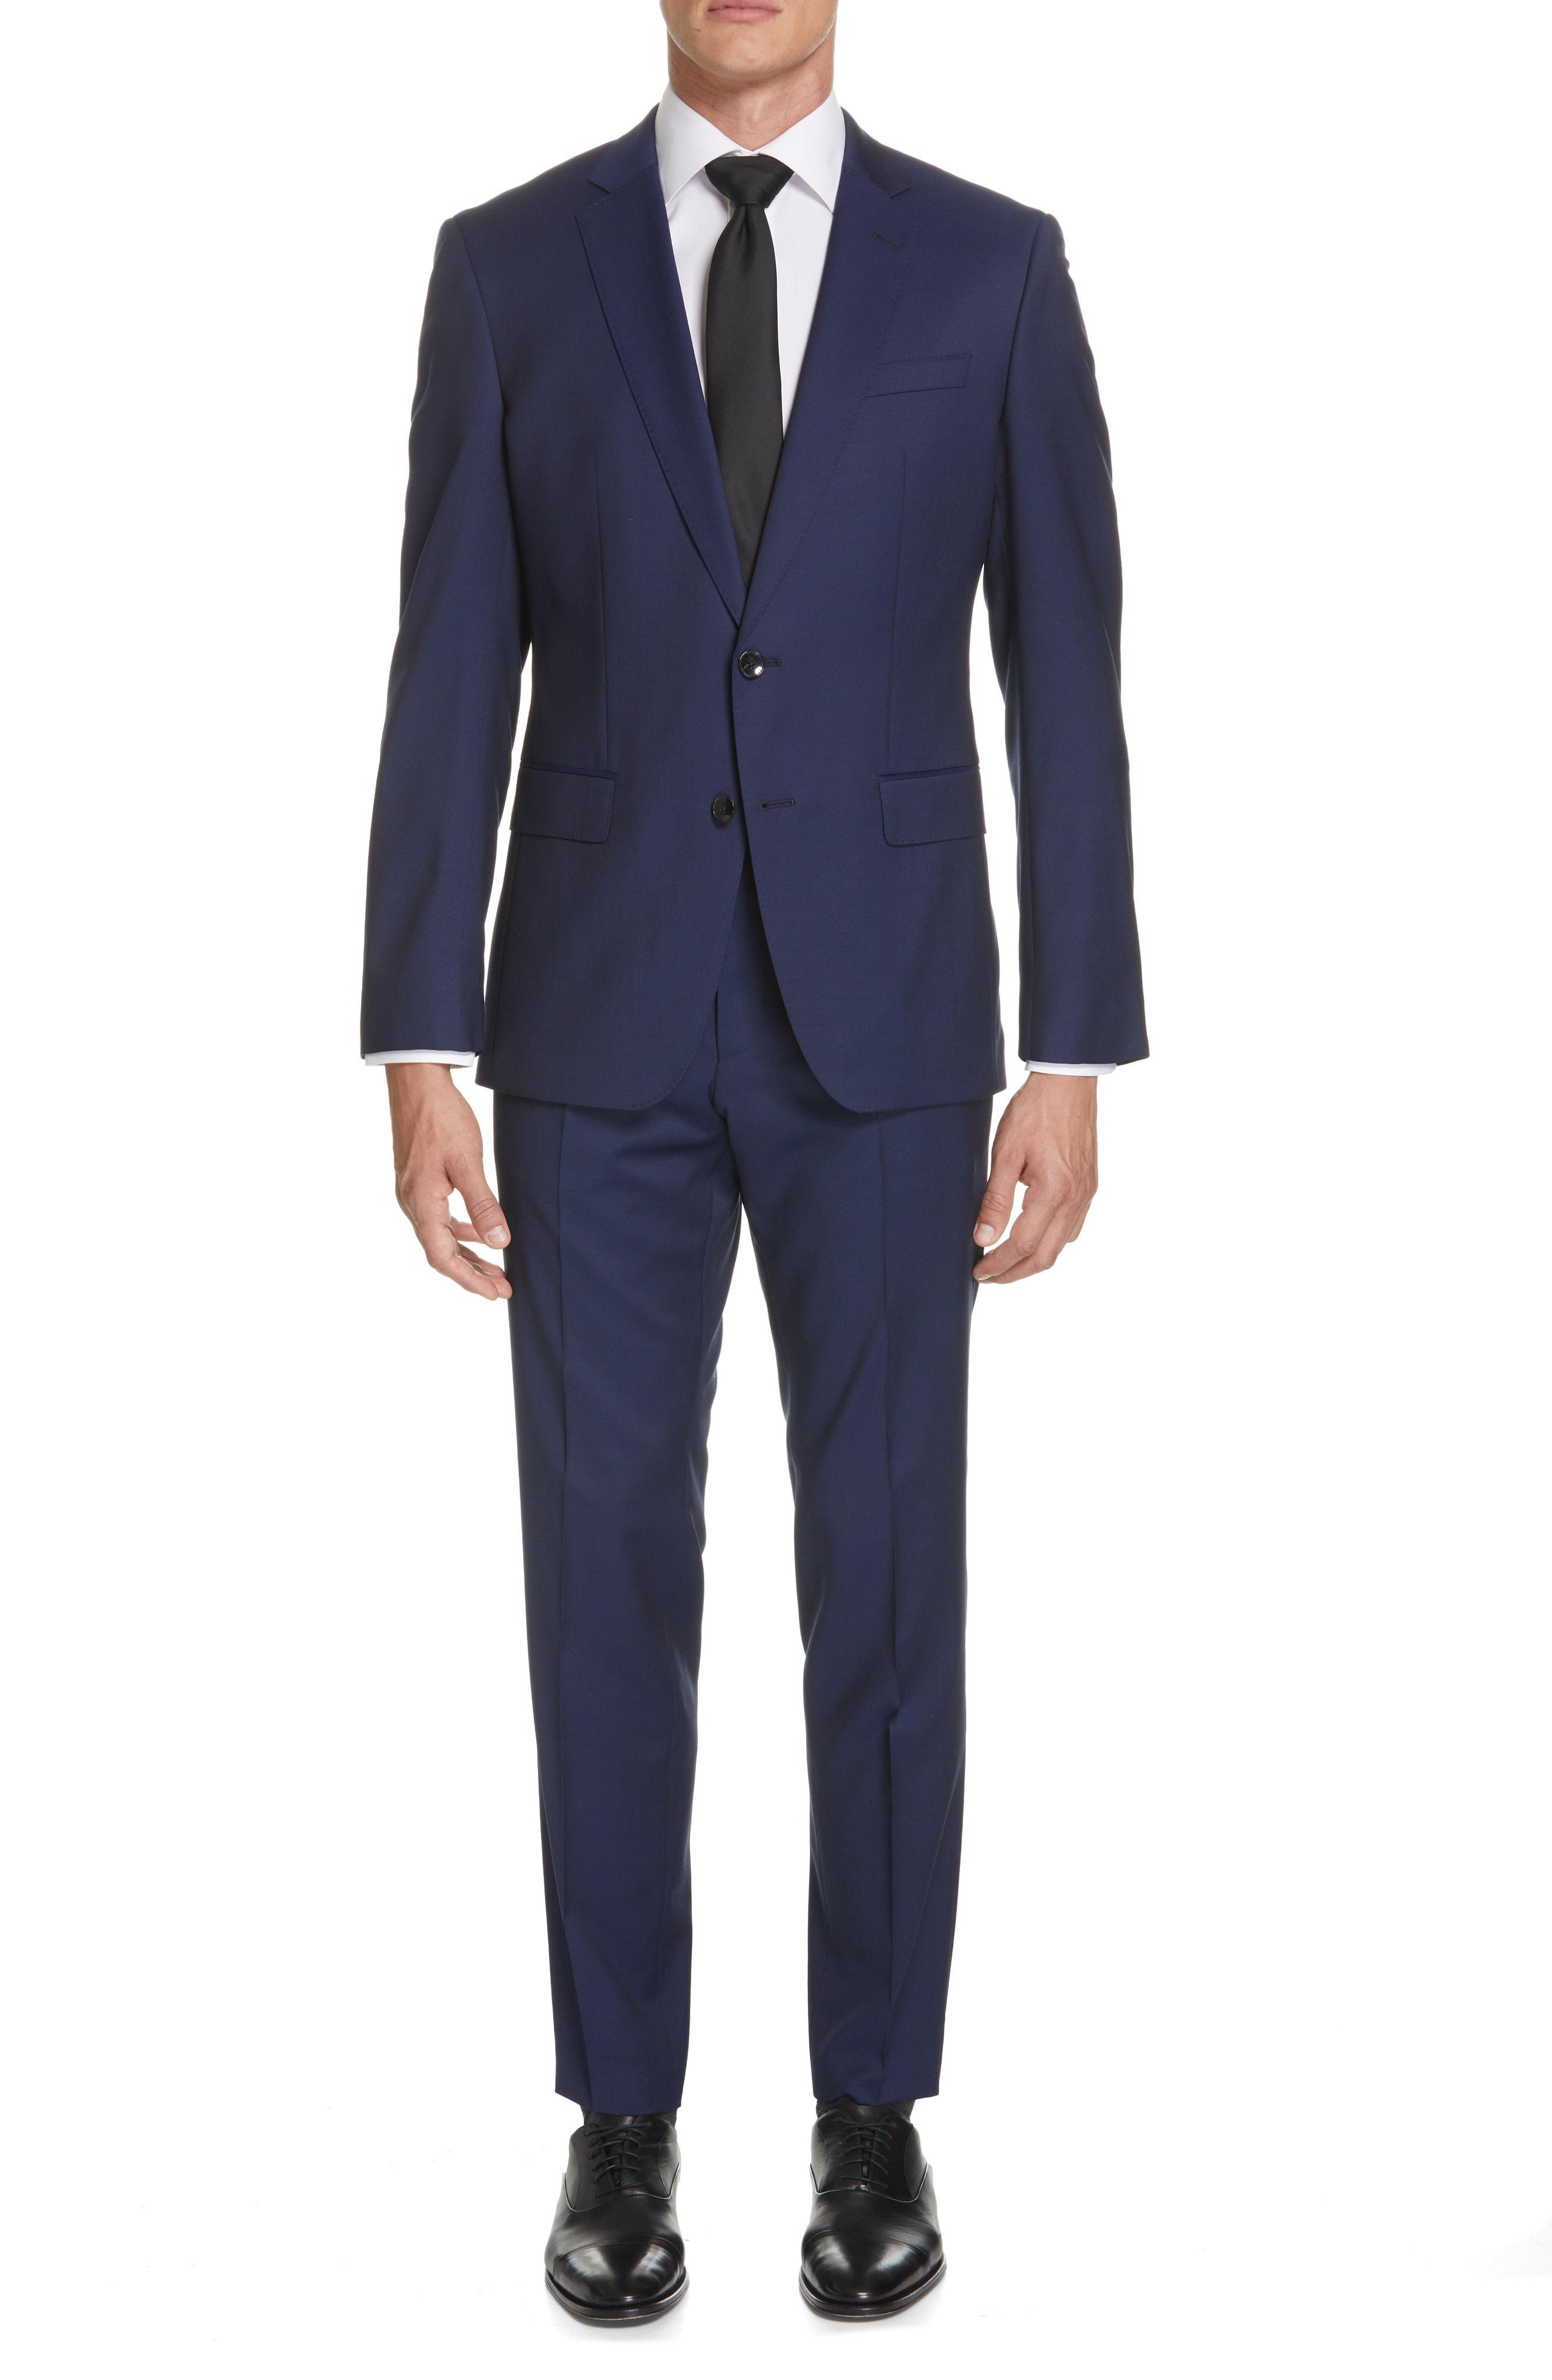 Lyst - BOSS Huge/genius Trim Fit Solid Wool Suit in Blue for Men